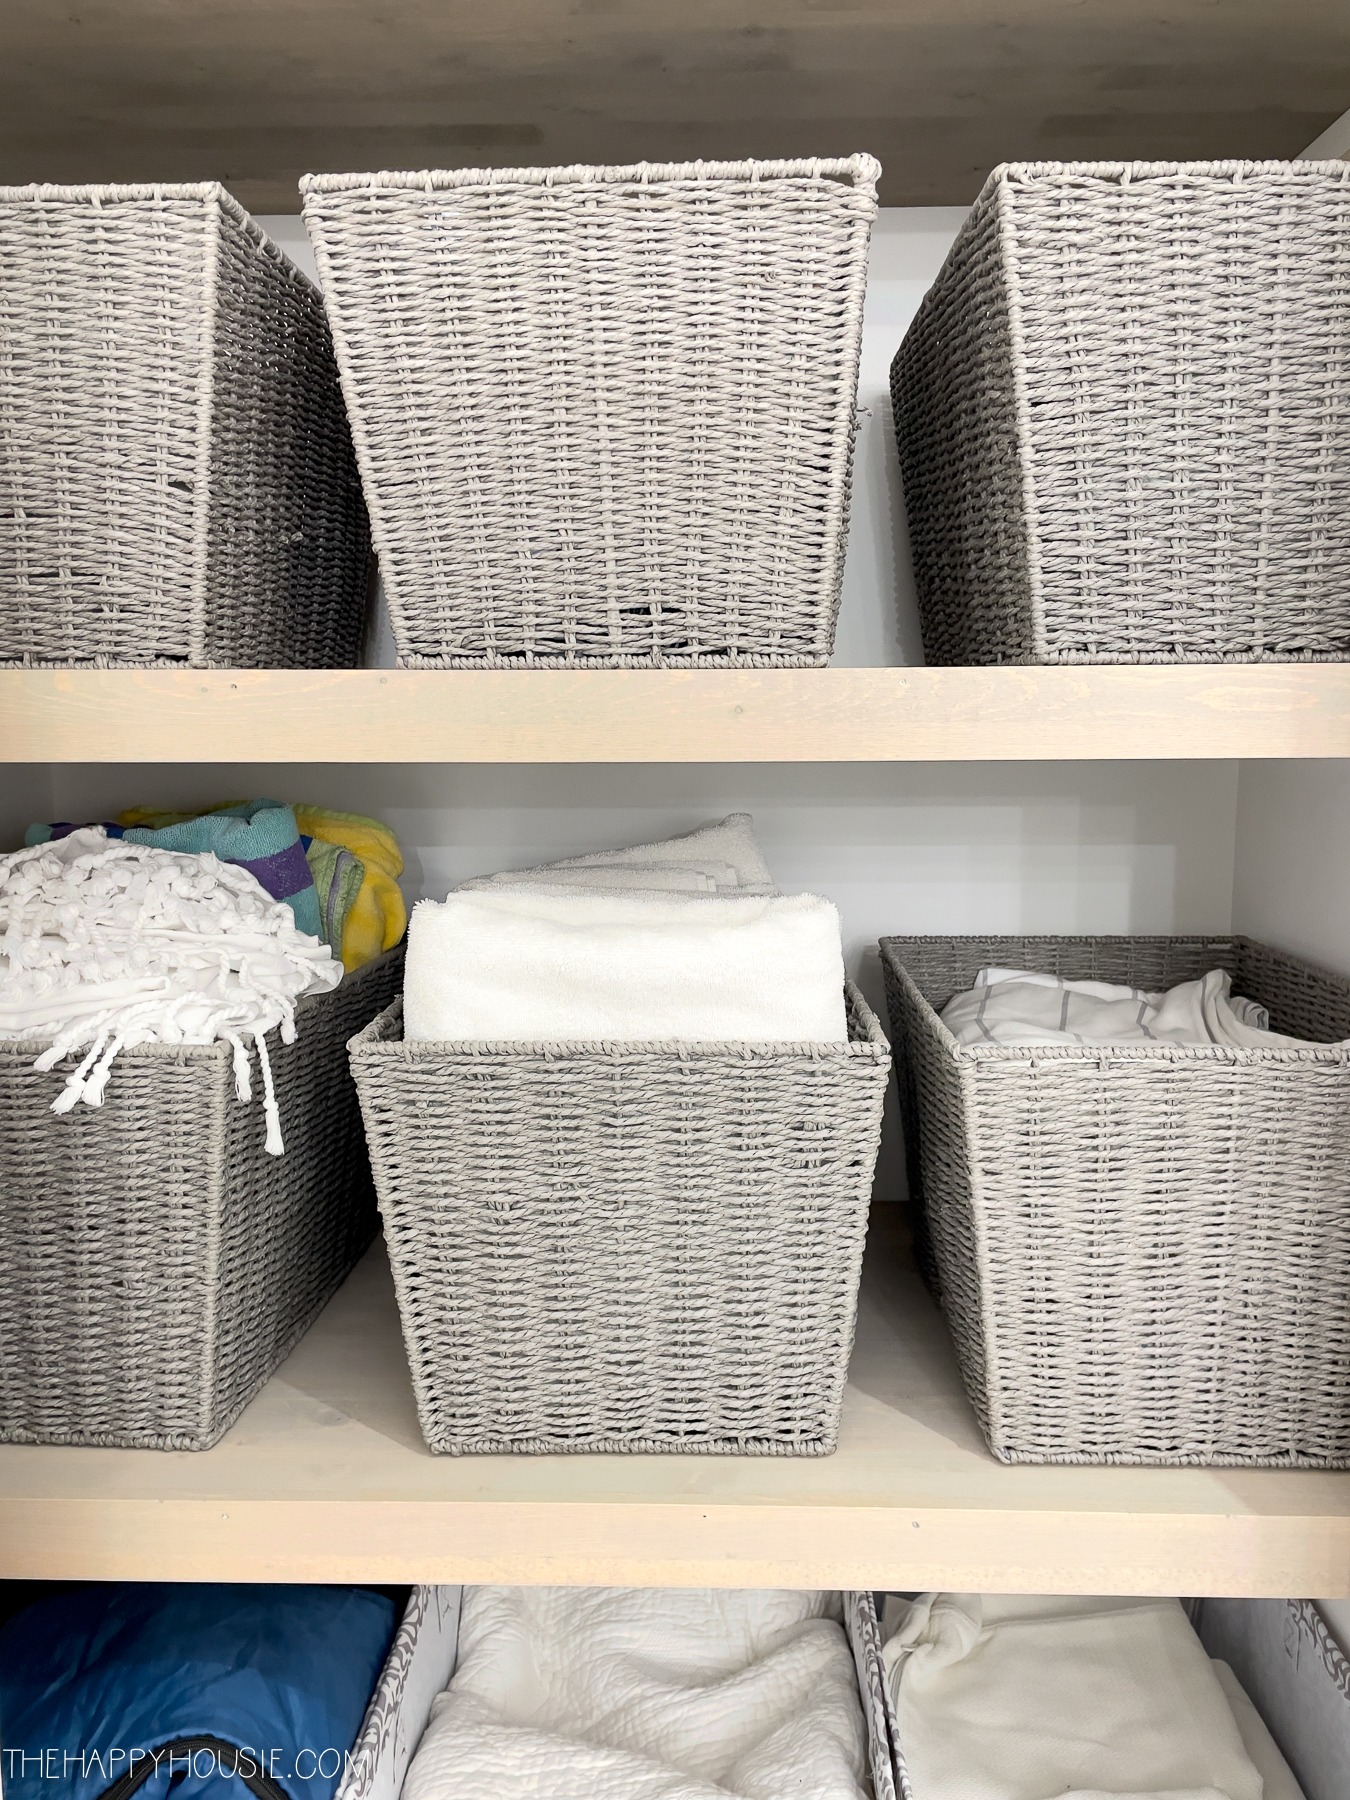 Woven baskets on the shelf.